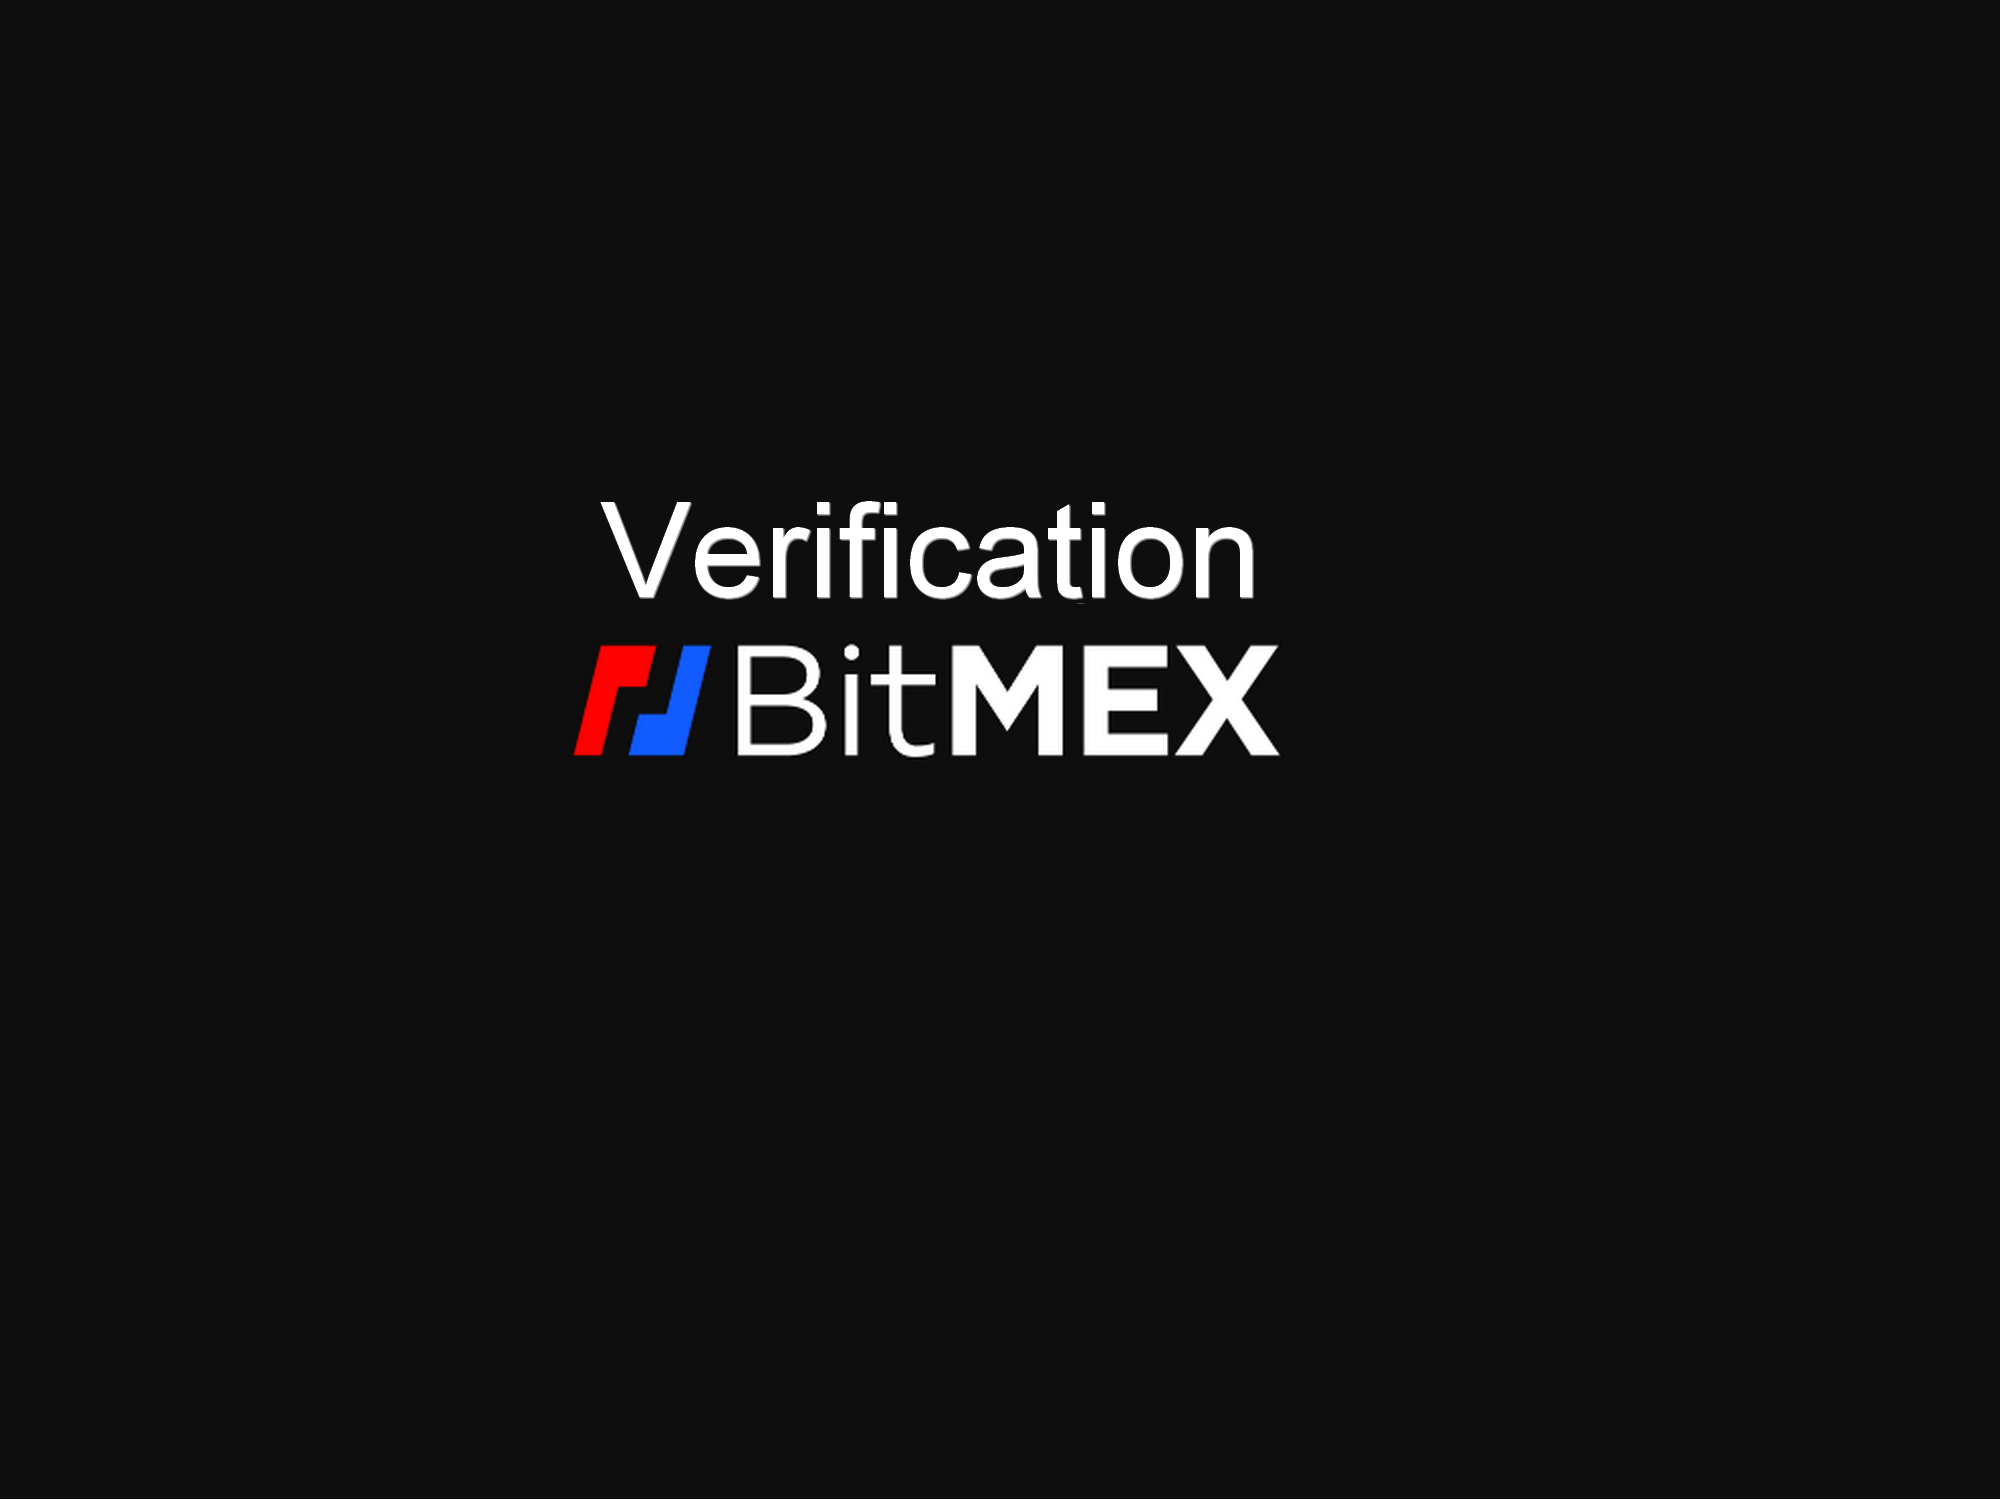 The verification process on Bitmex Exchange